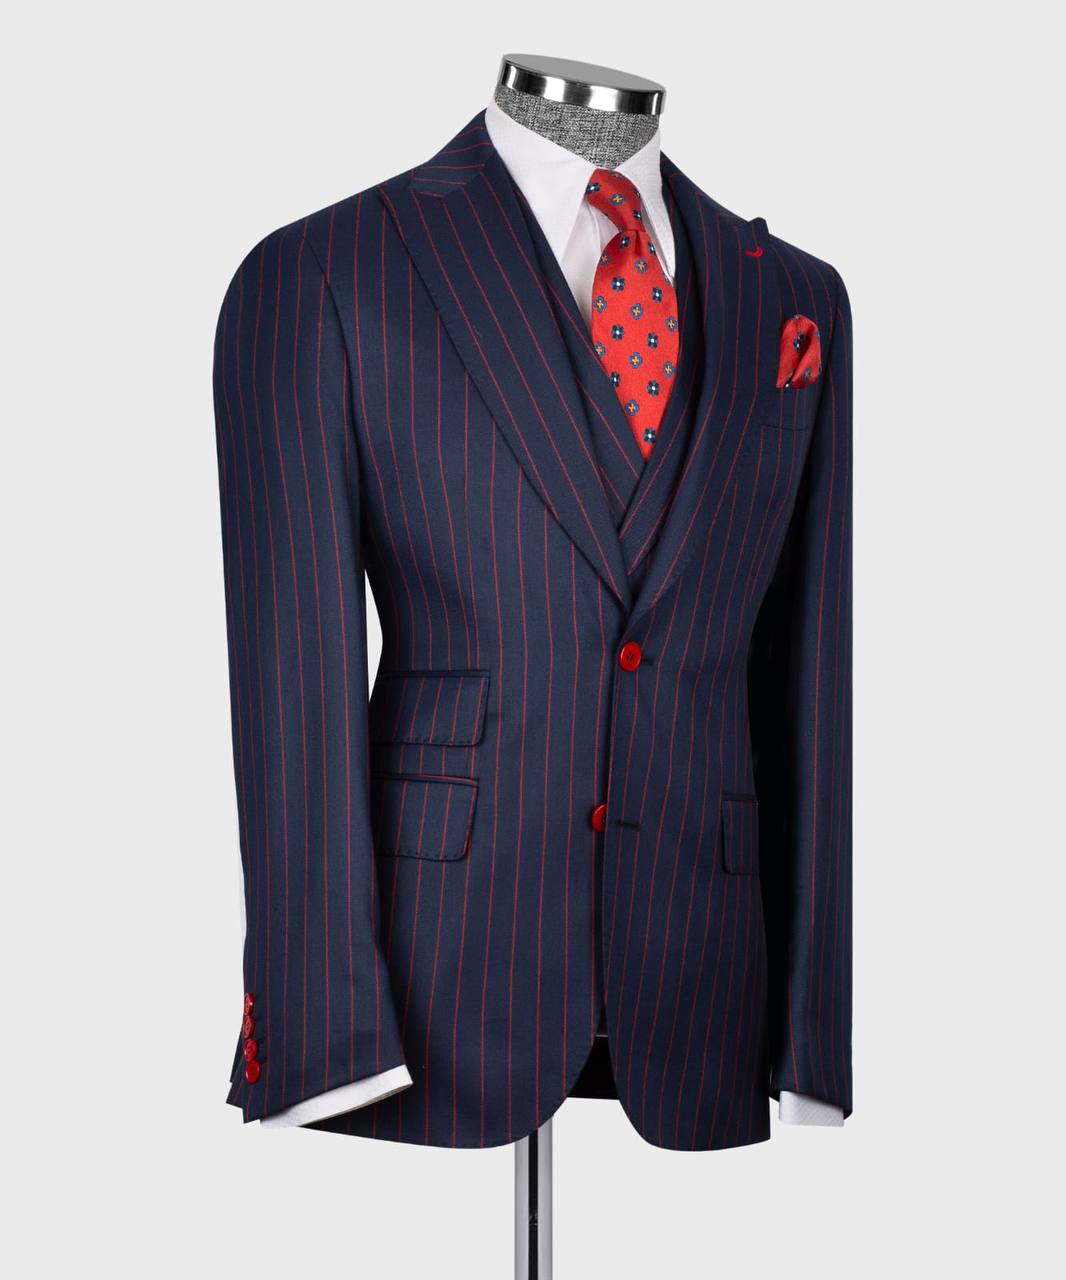 Men's Suit Set, %100 Wool, Striped, Navy